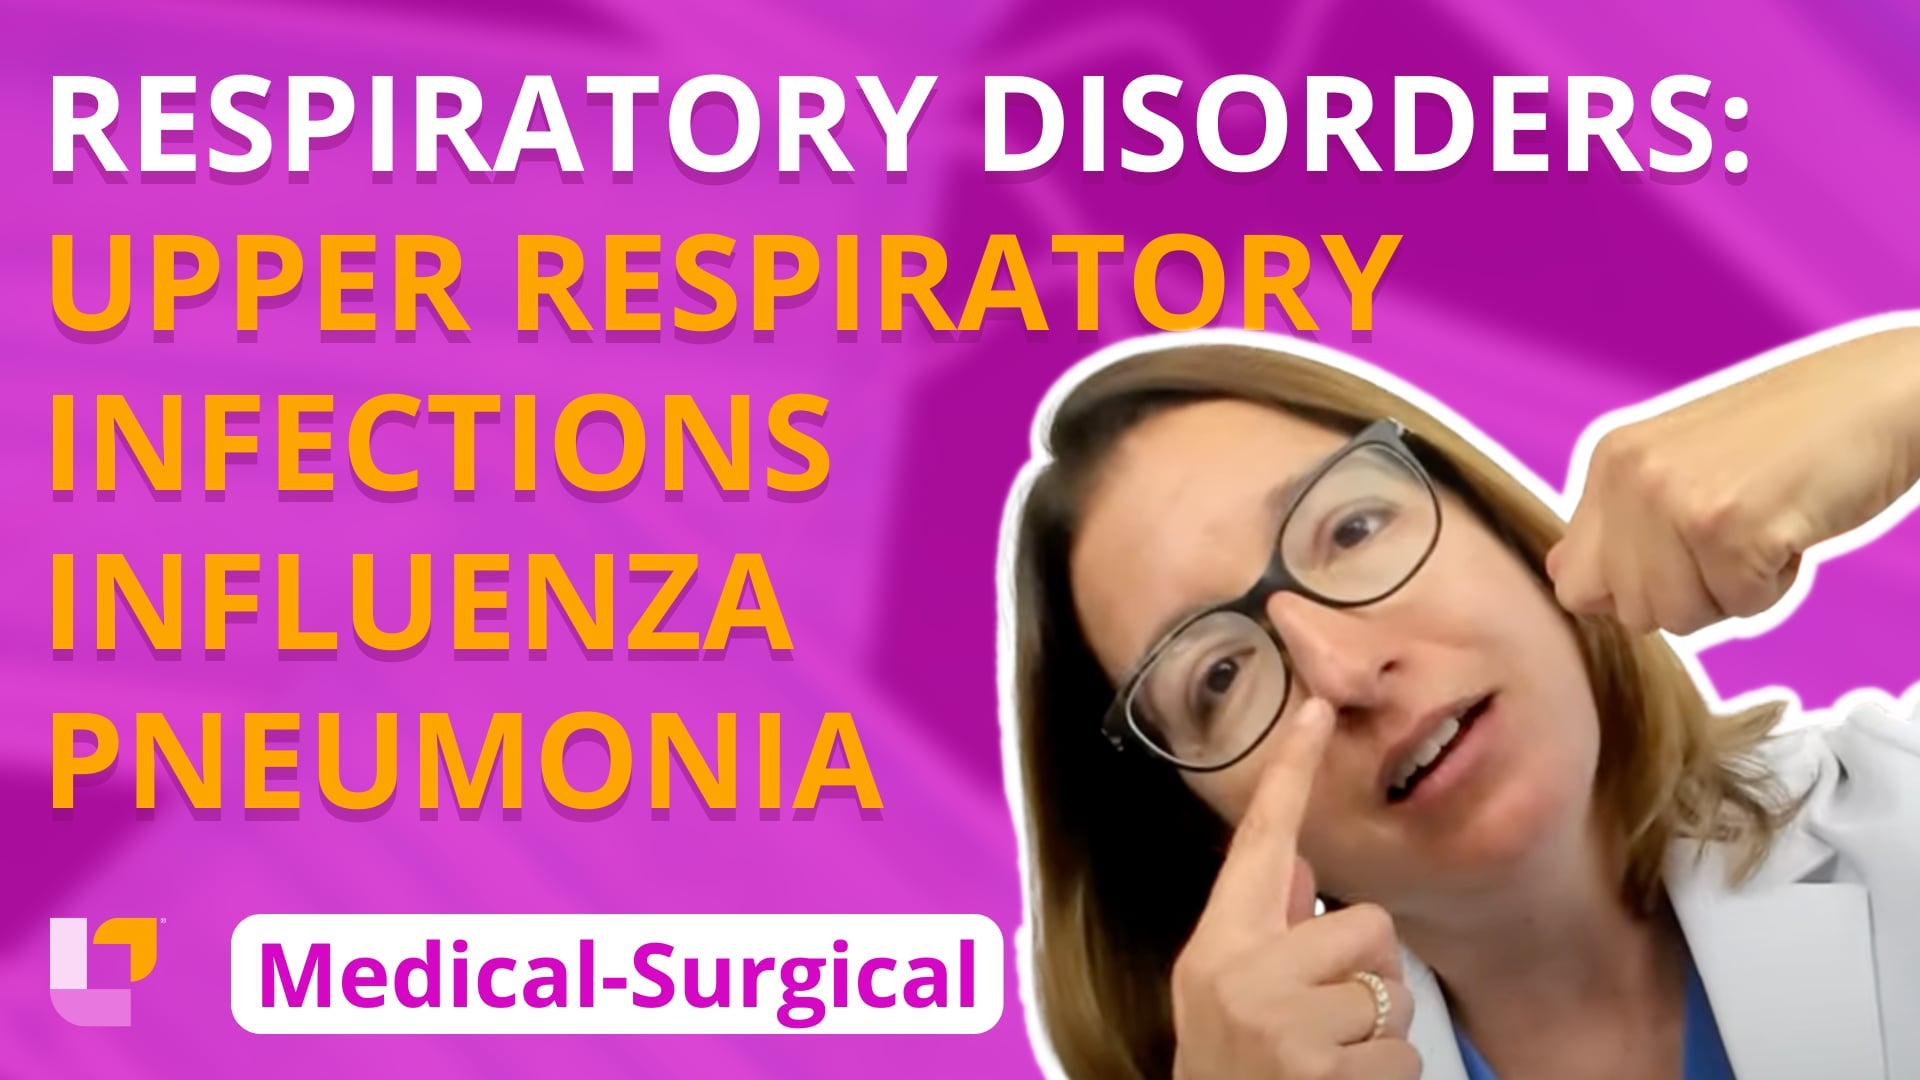 Med-Surg Respiratory System, part 8: Upper Respiratory Tract Disorders, Influenza, Pneumonia - LevelUpRN